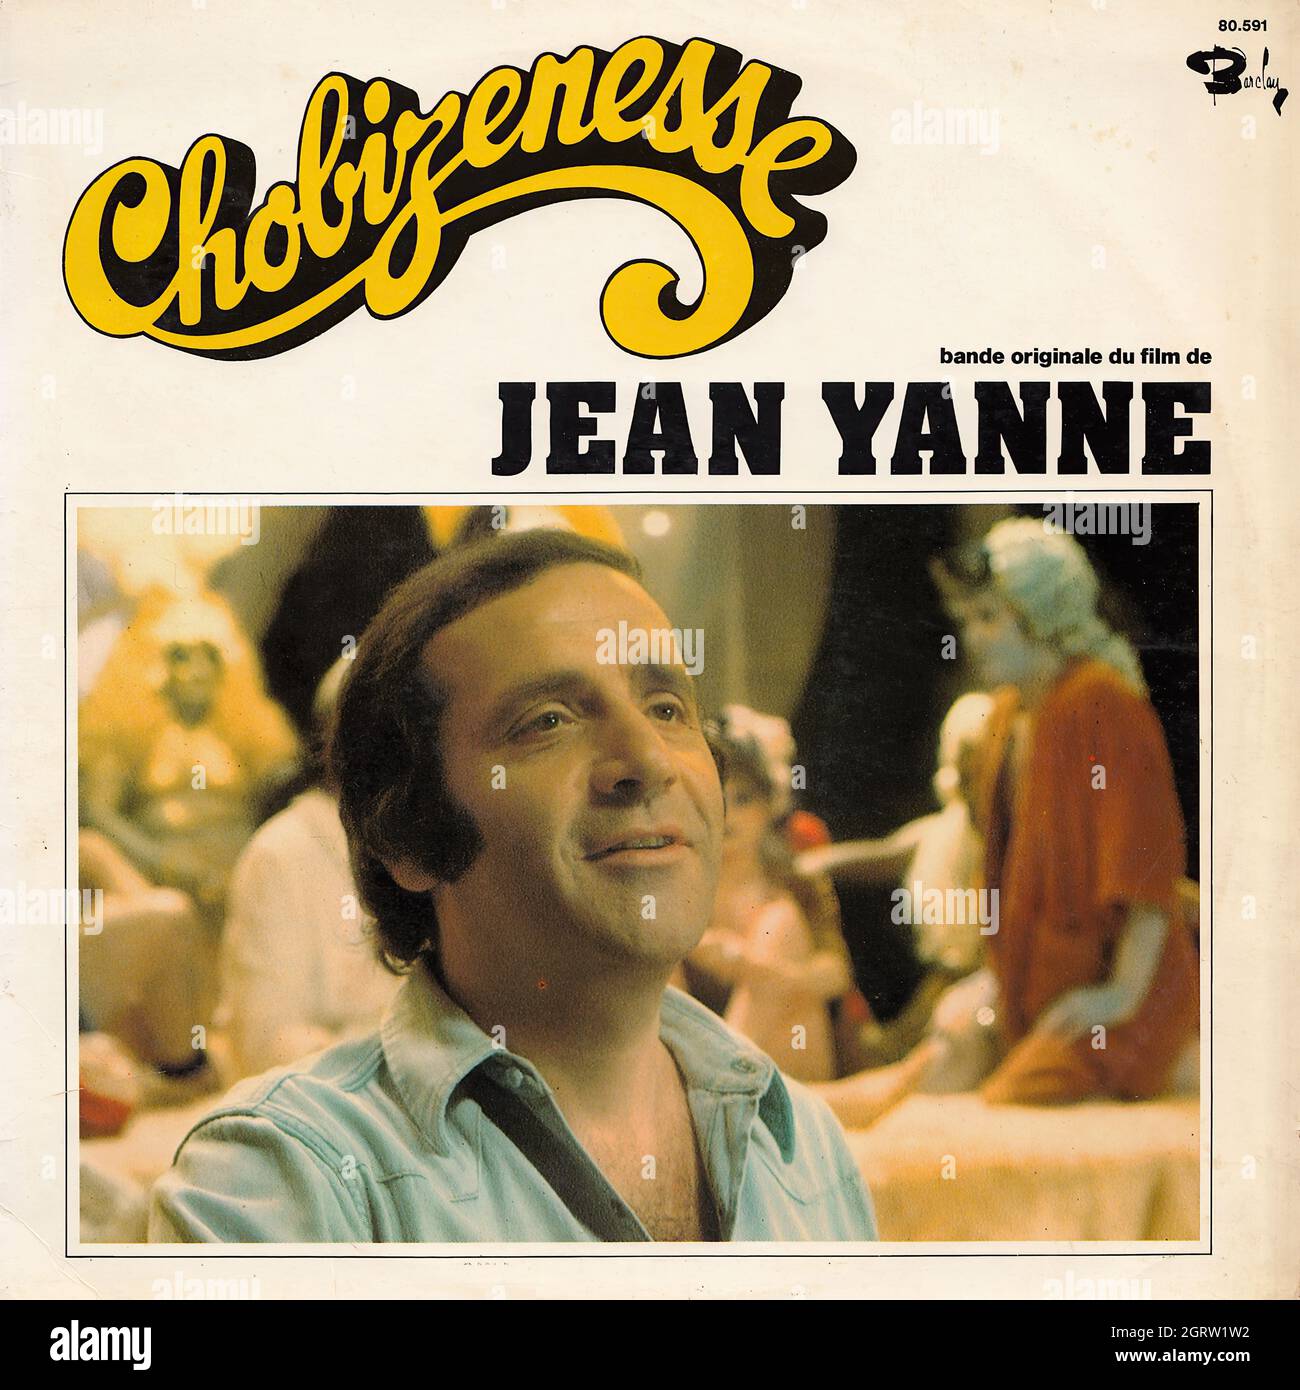 Jean Yanne - Claude Germain - Raymond Alessandrini - Chobizenesse o.s.t. - Vintage Vinyl Record Cover Stock Photo